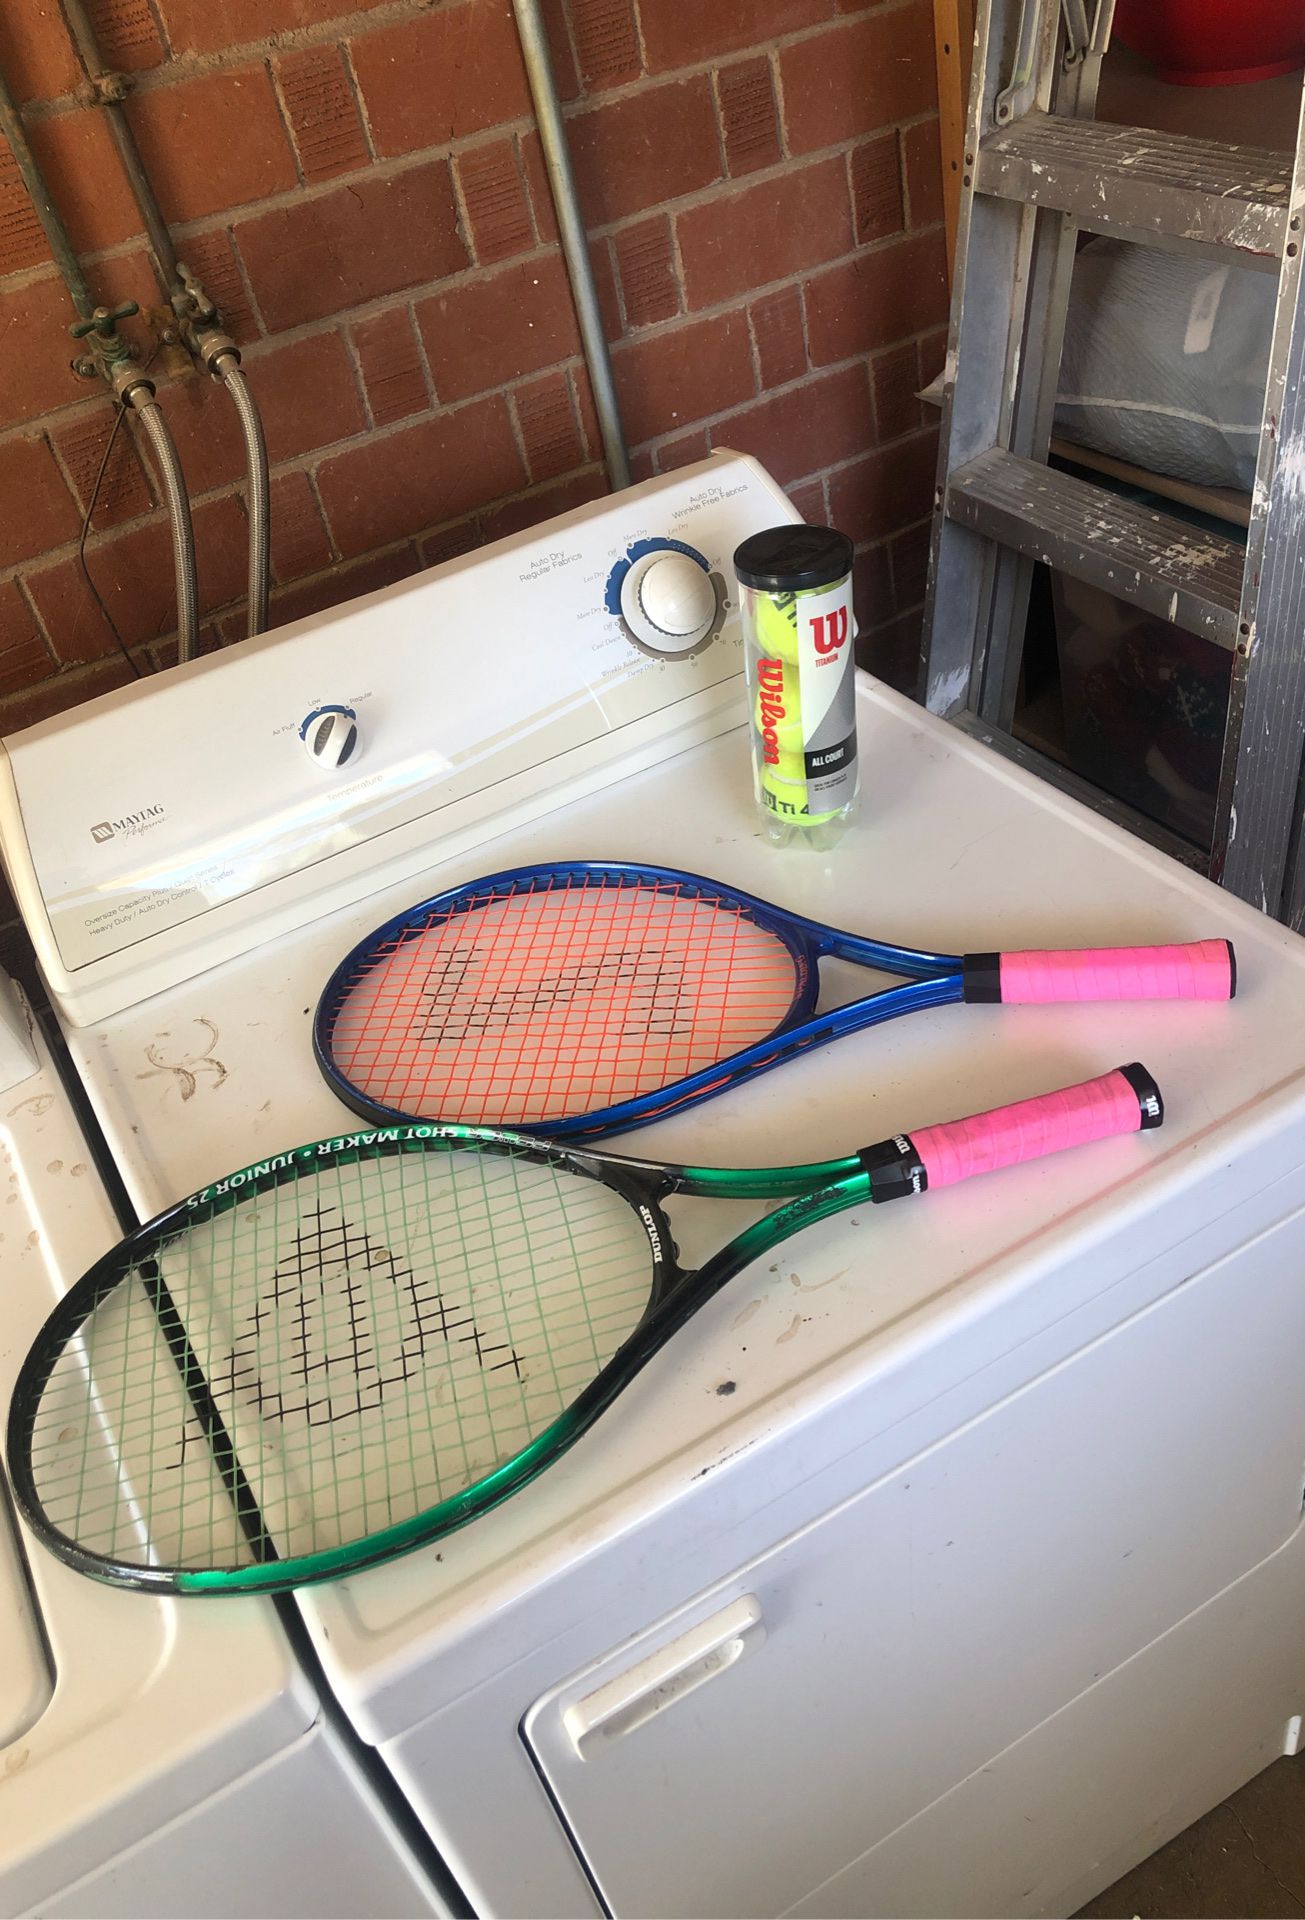 2 tennis rackets and 3 balls